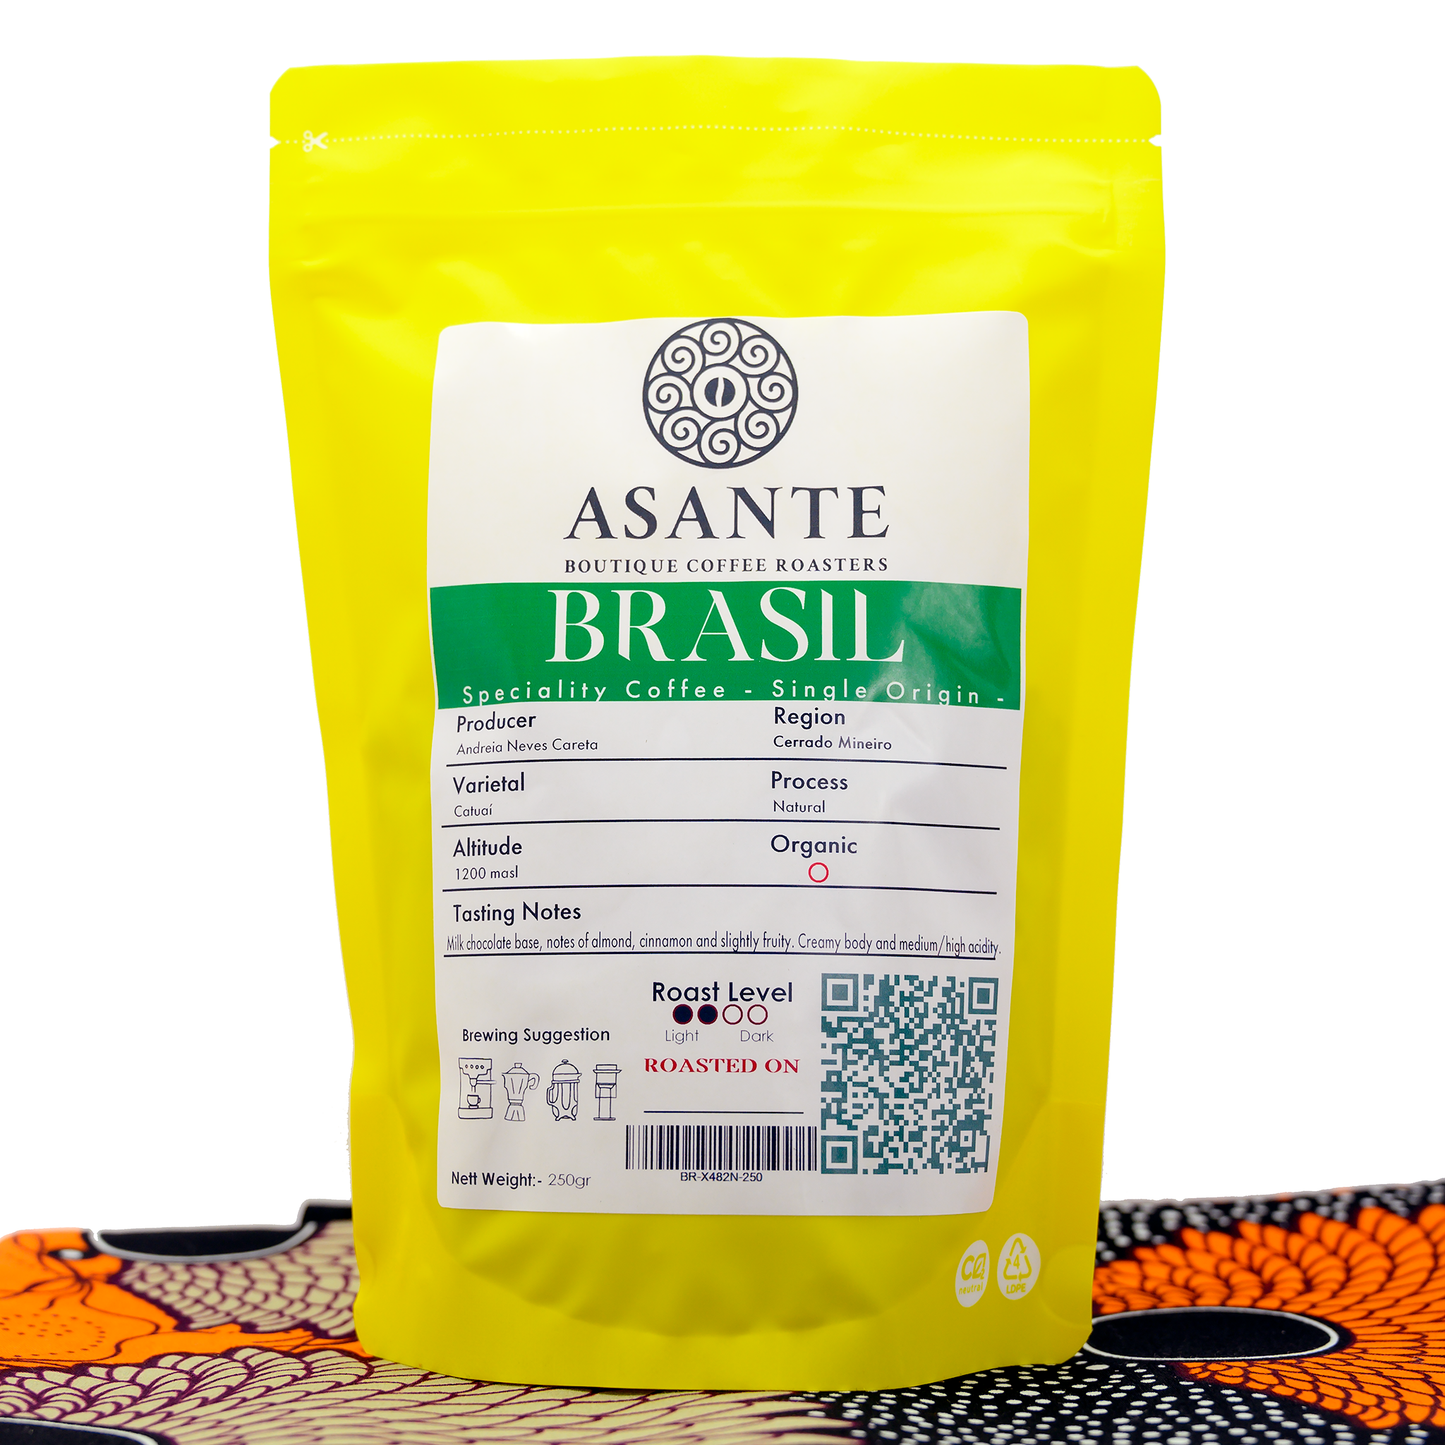 BRAZIL Specialty Coffee - Cerrado Mineiro - Natural